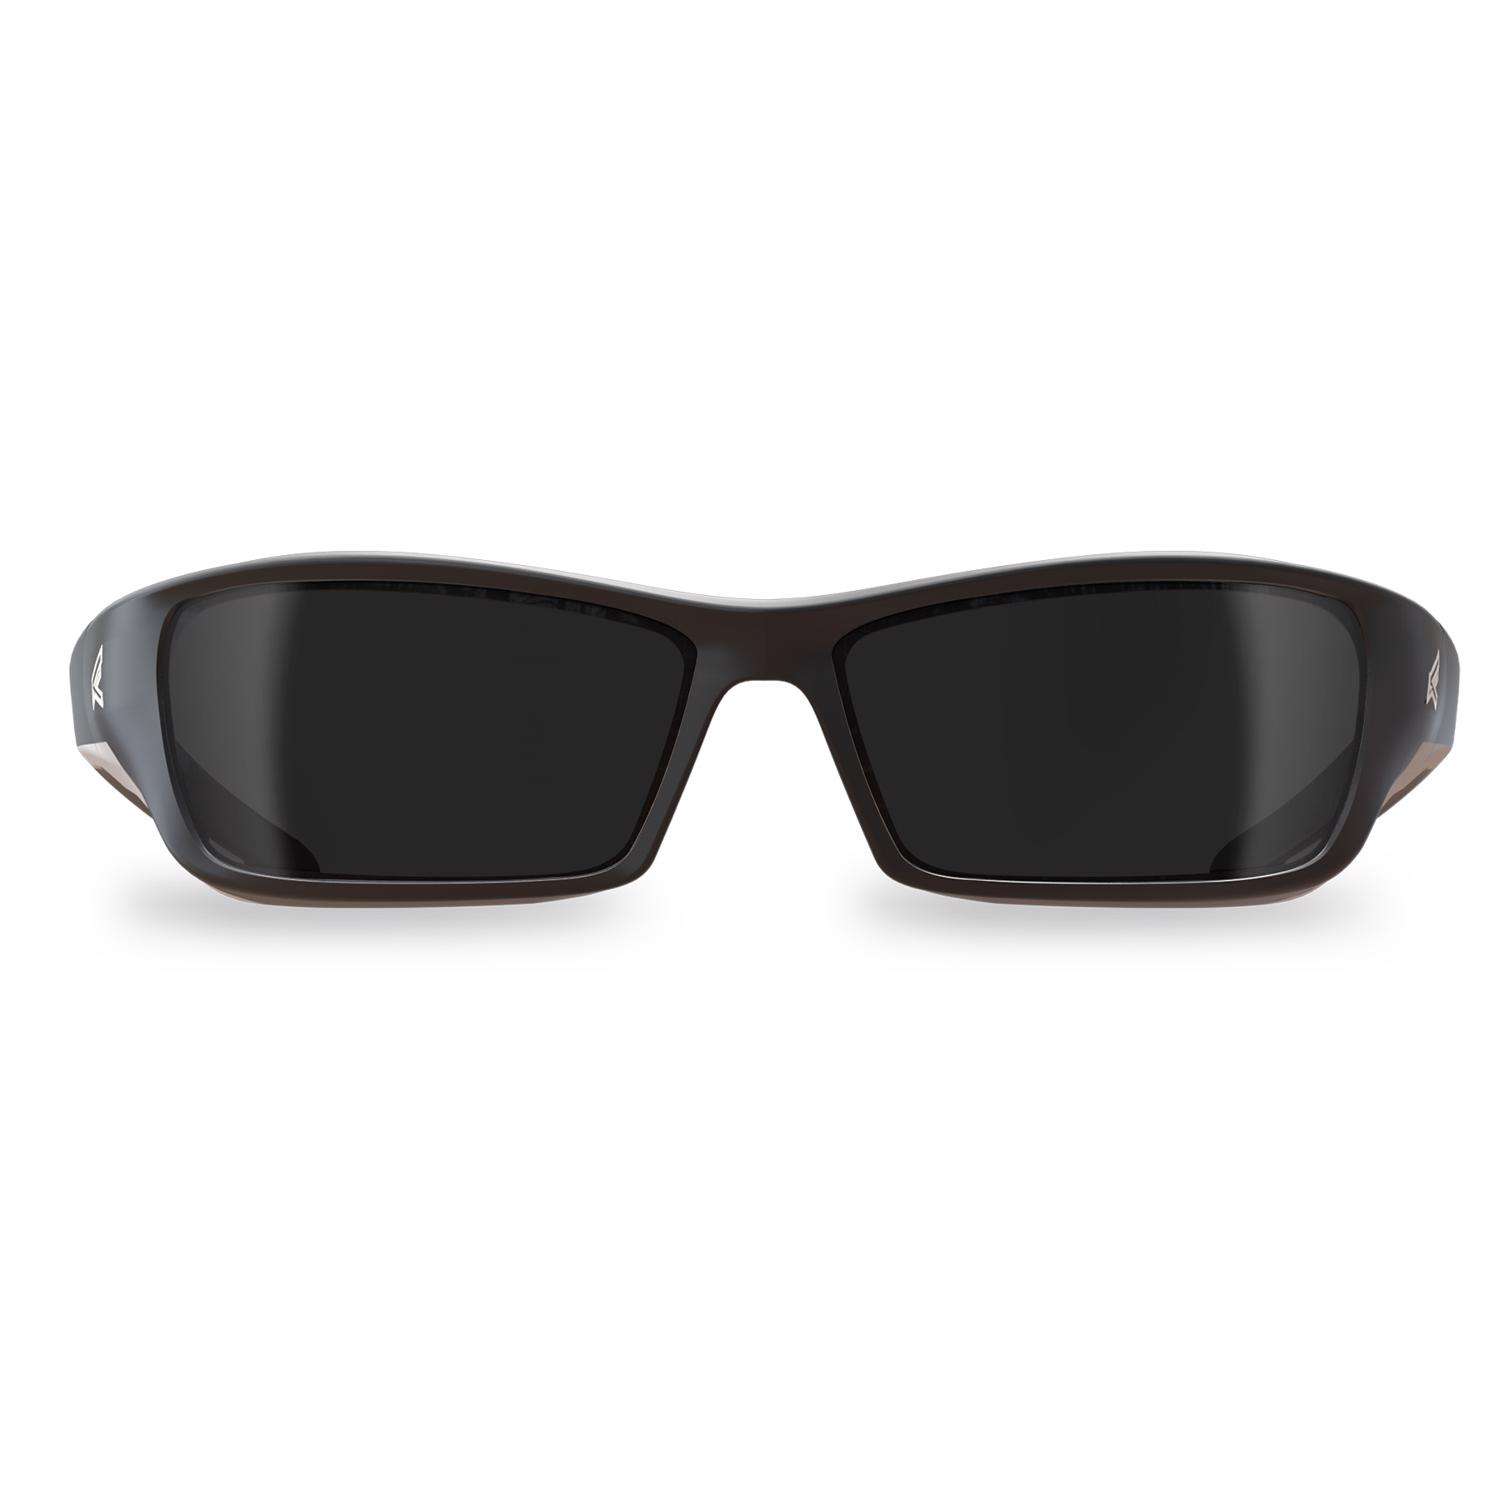 Edge Eyewear SR116 Reclus - Black Frame/Smoke Lens, Safety Glasses